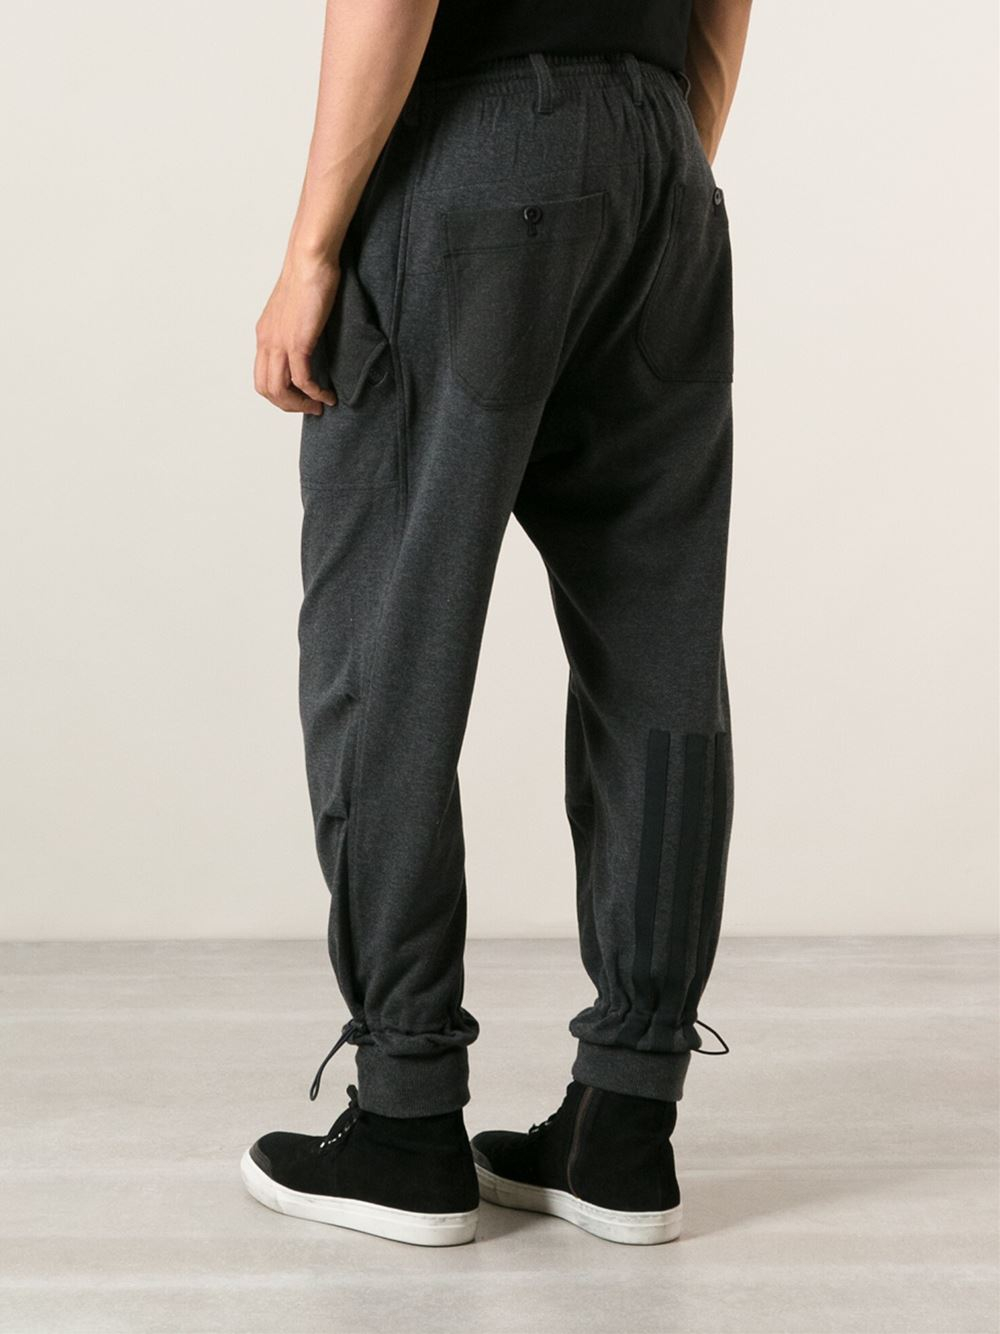 Y-3 Flap Pocket Track Pants in Grey (Gray) for Men - Lyst